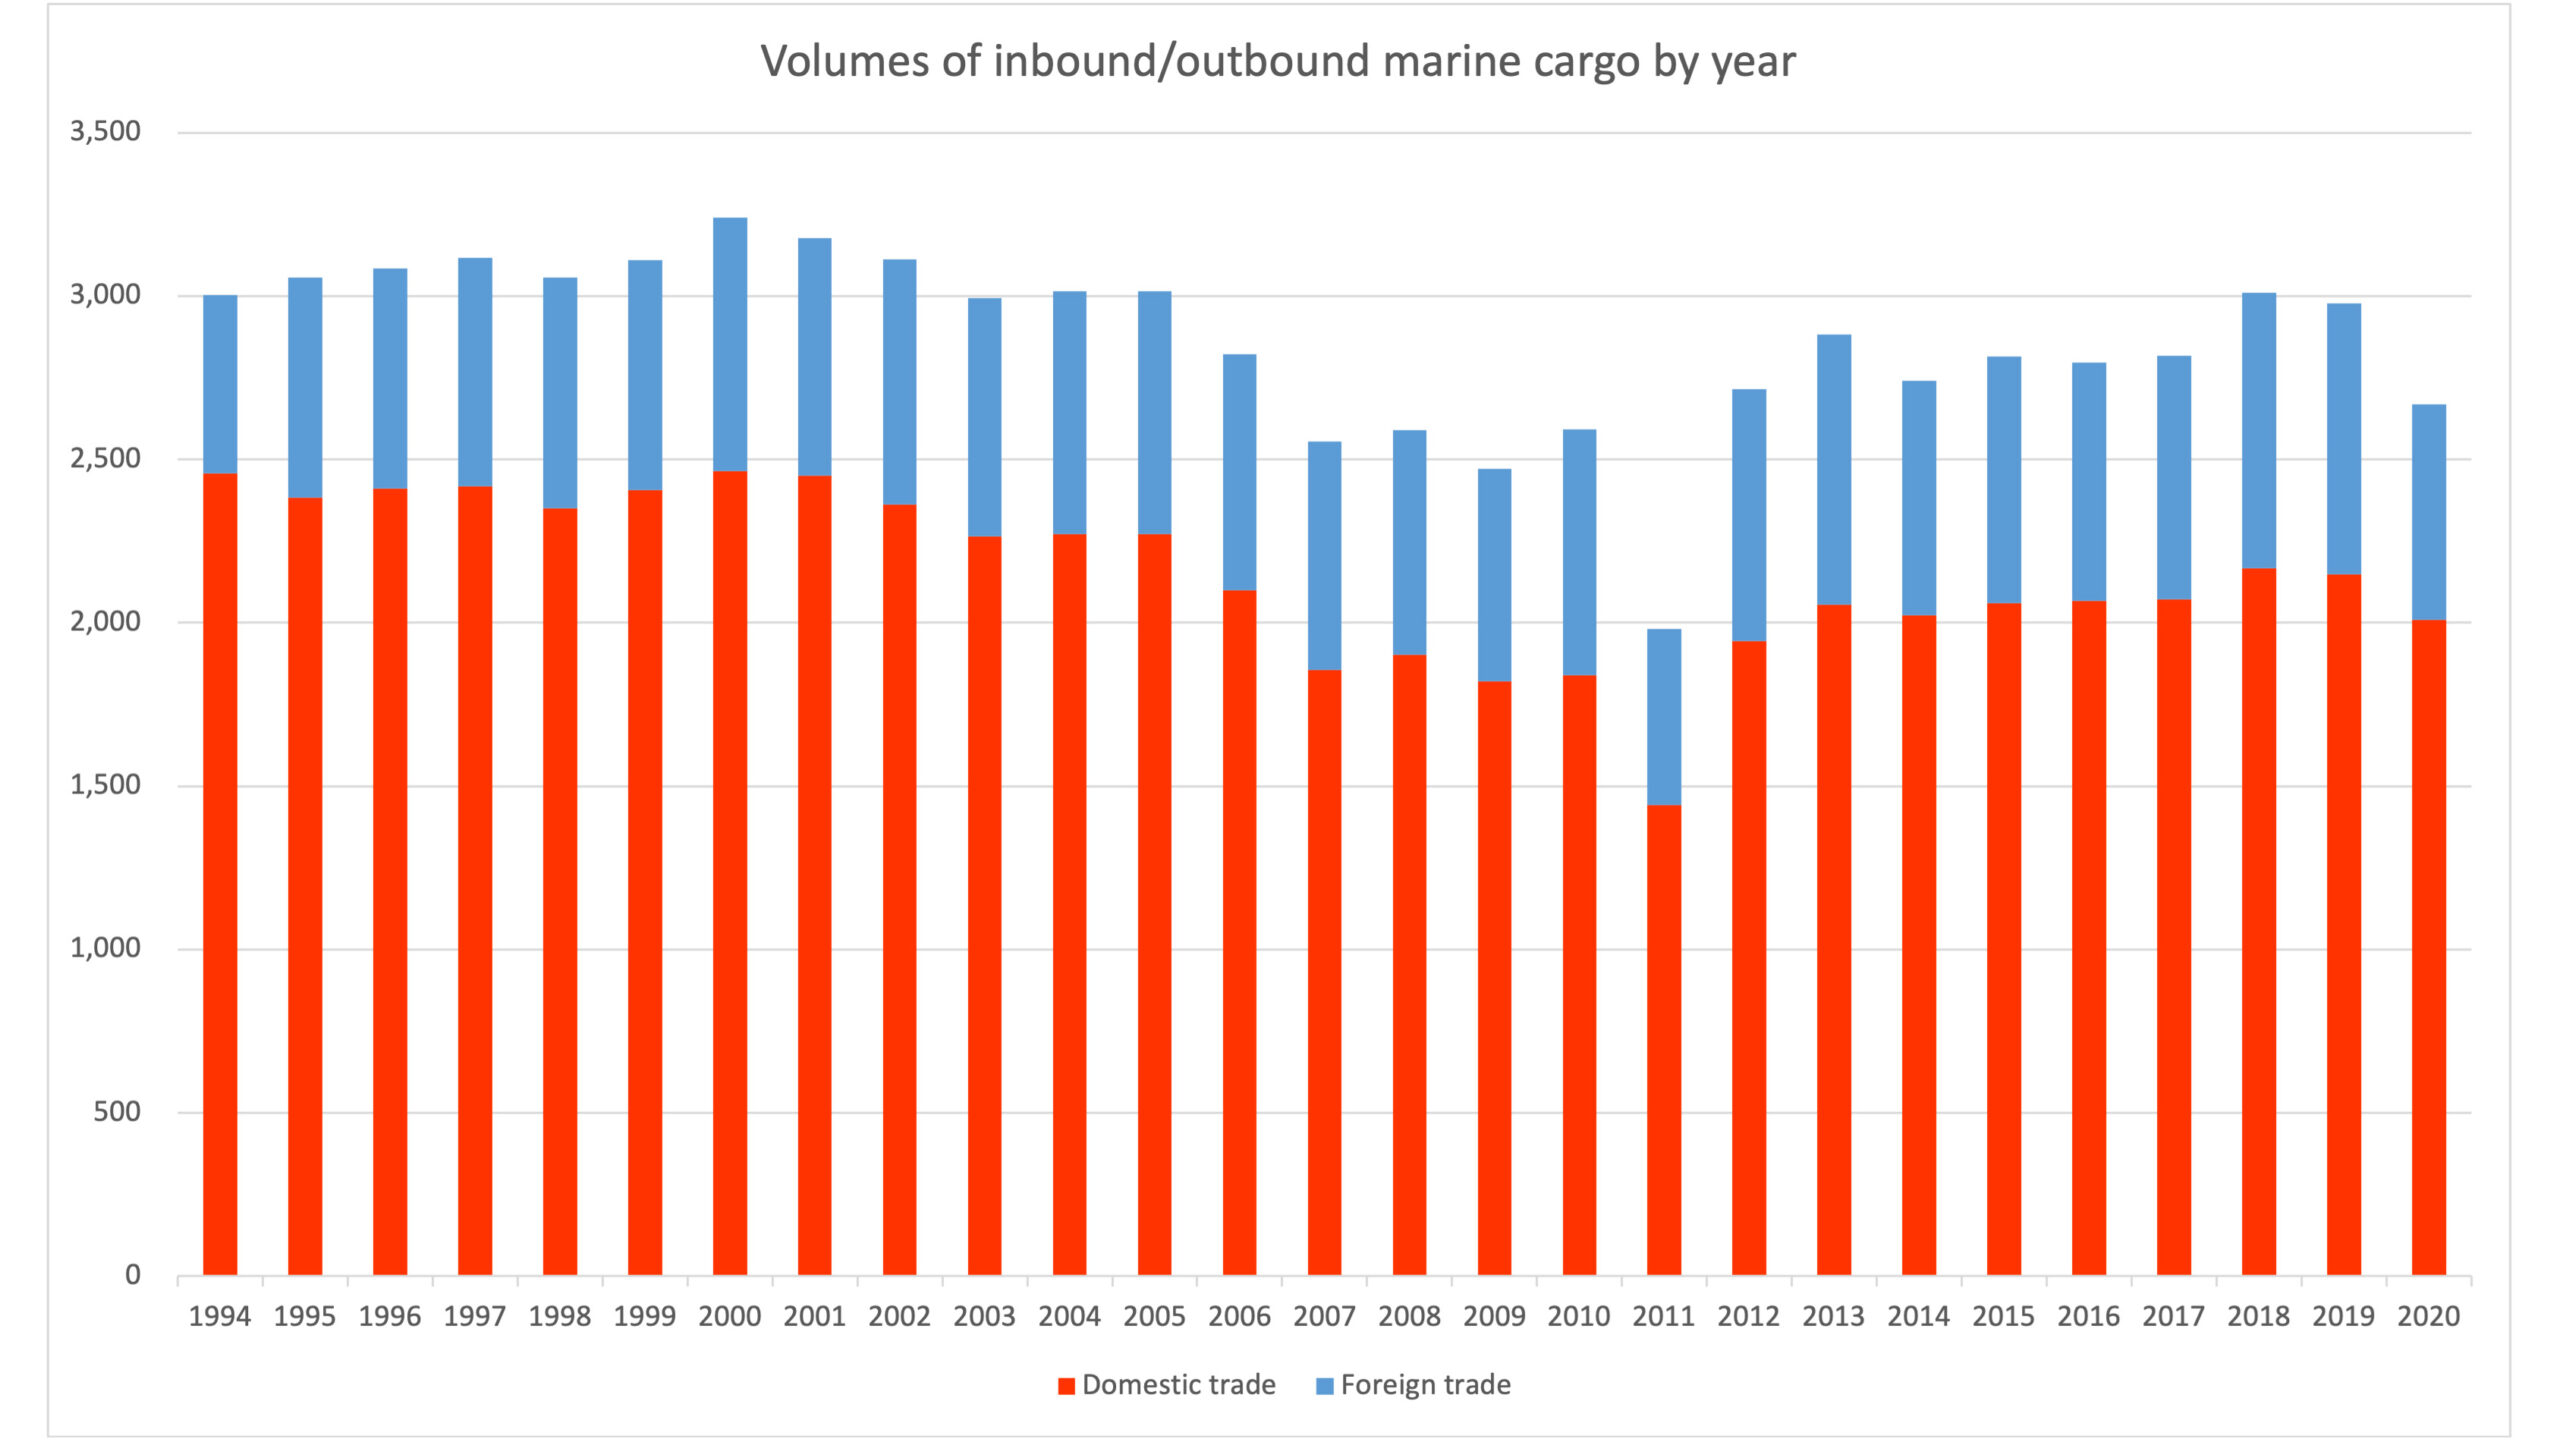 Annual inbound and outbound marine cargo (2020)Source: 